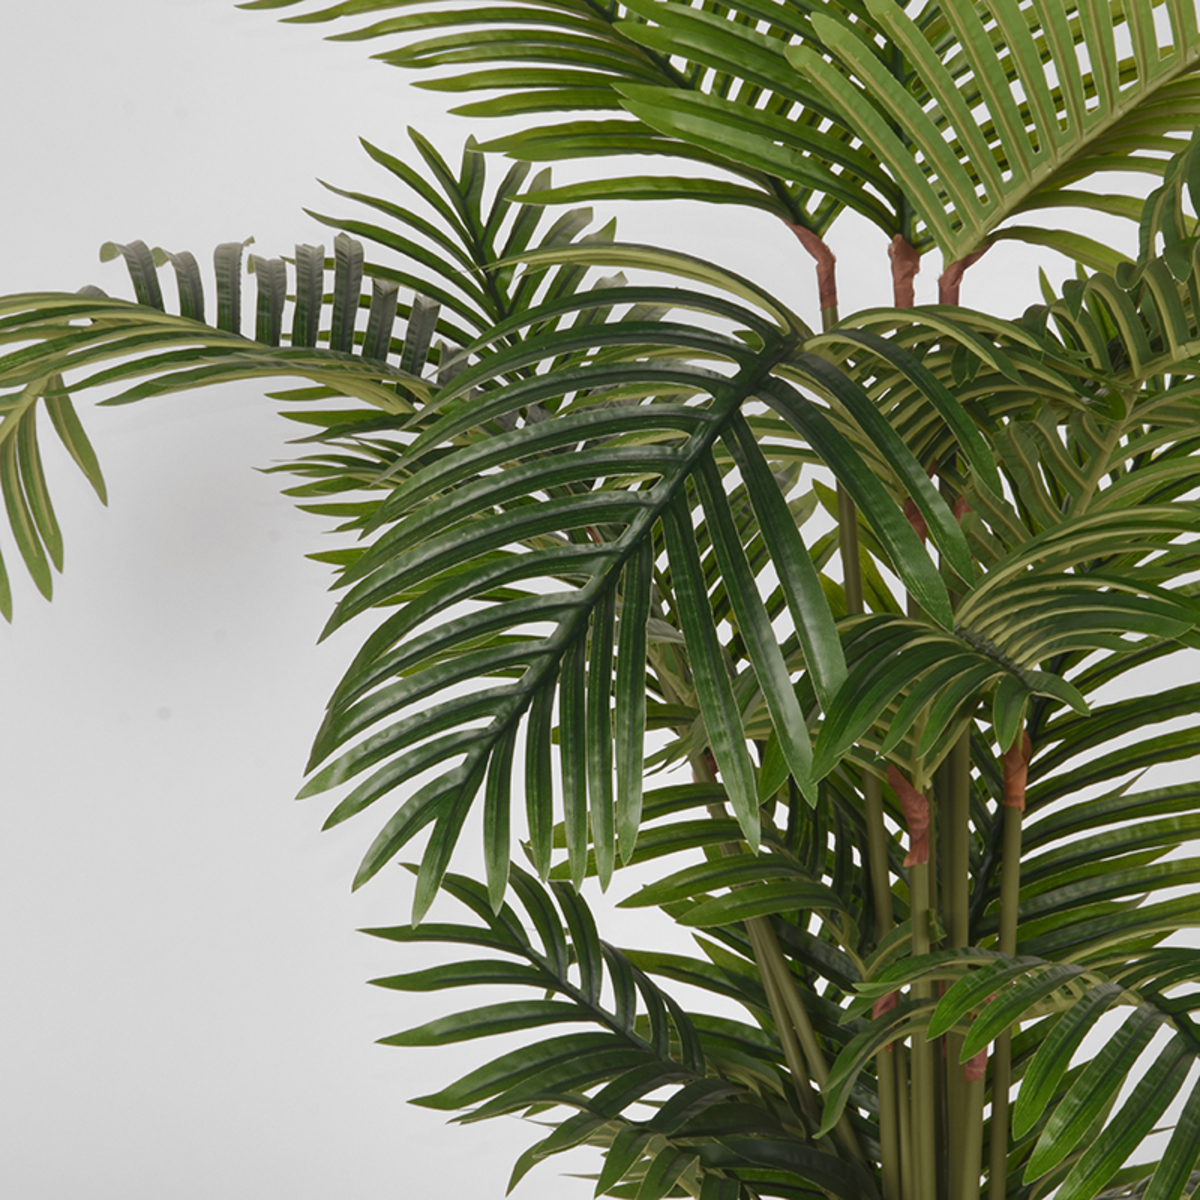 Kunstplant Areca Palm - 110 cm